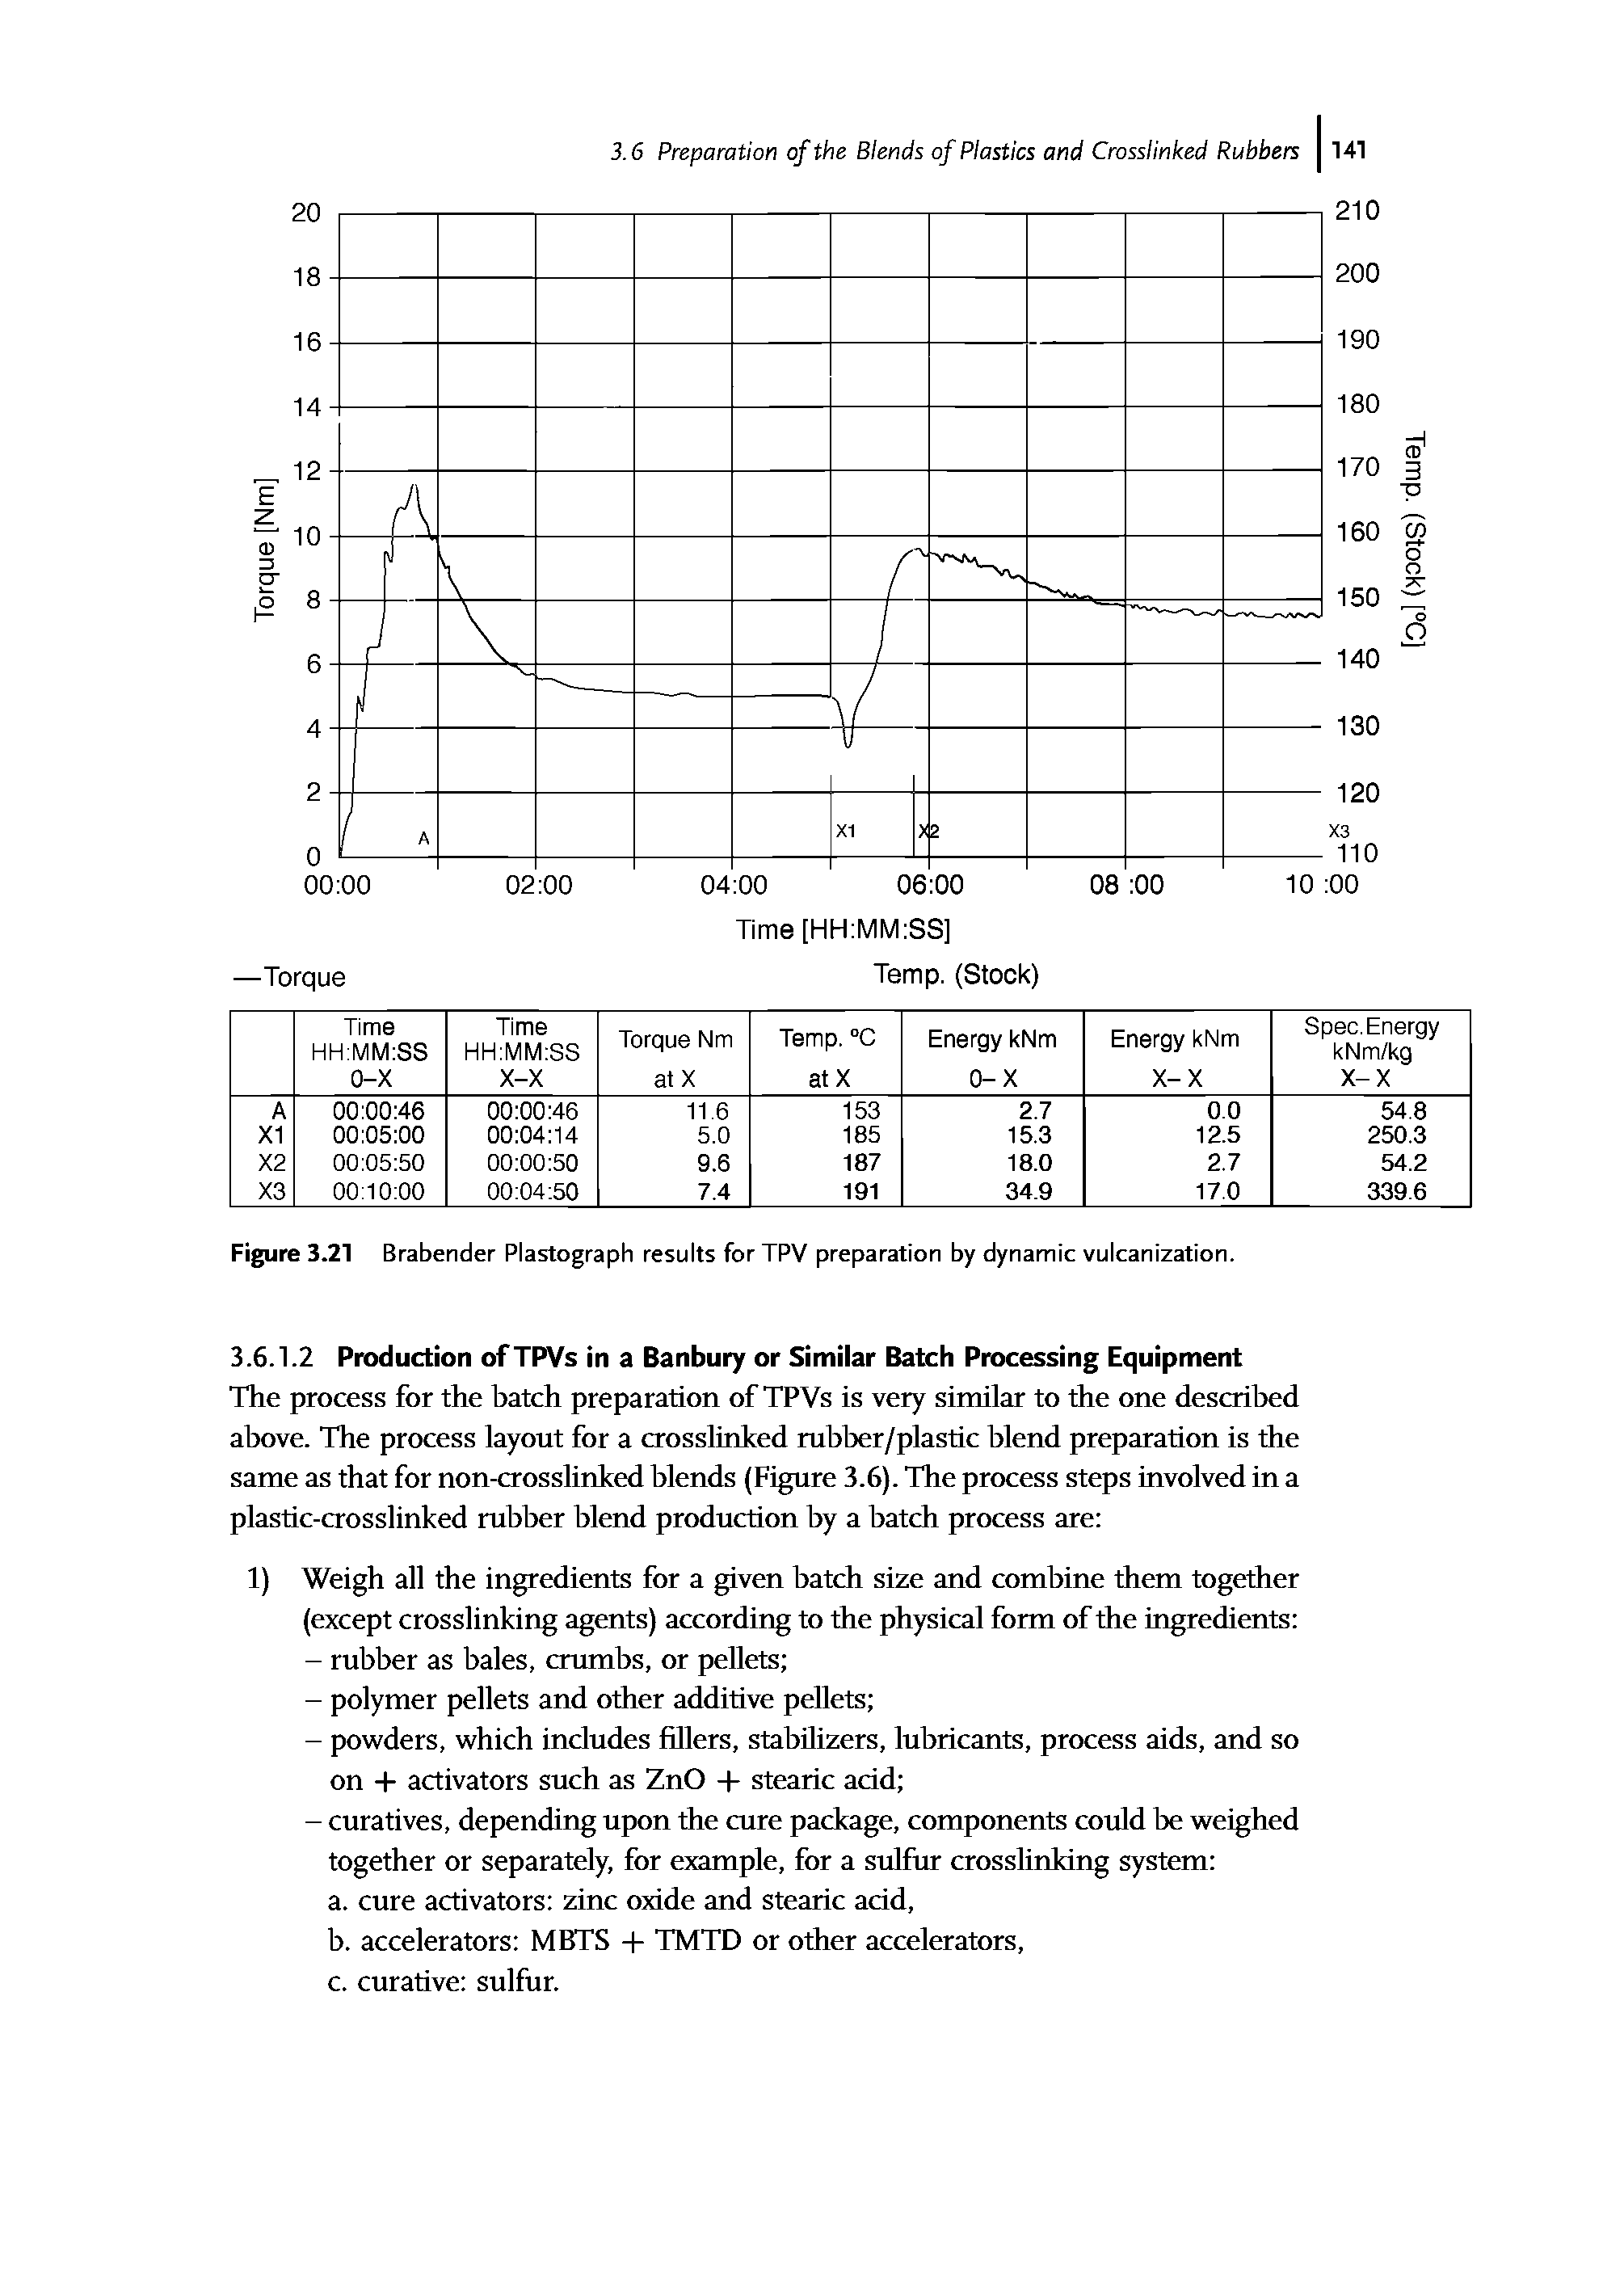 Figure 3.21 Brabender Plastograph results for TPV preparation by dynamic vulcanization.